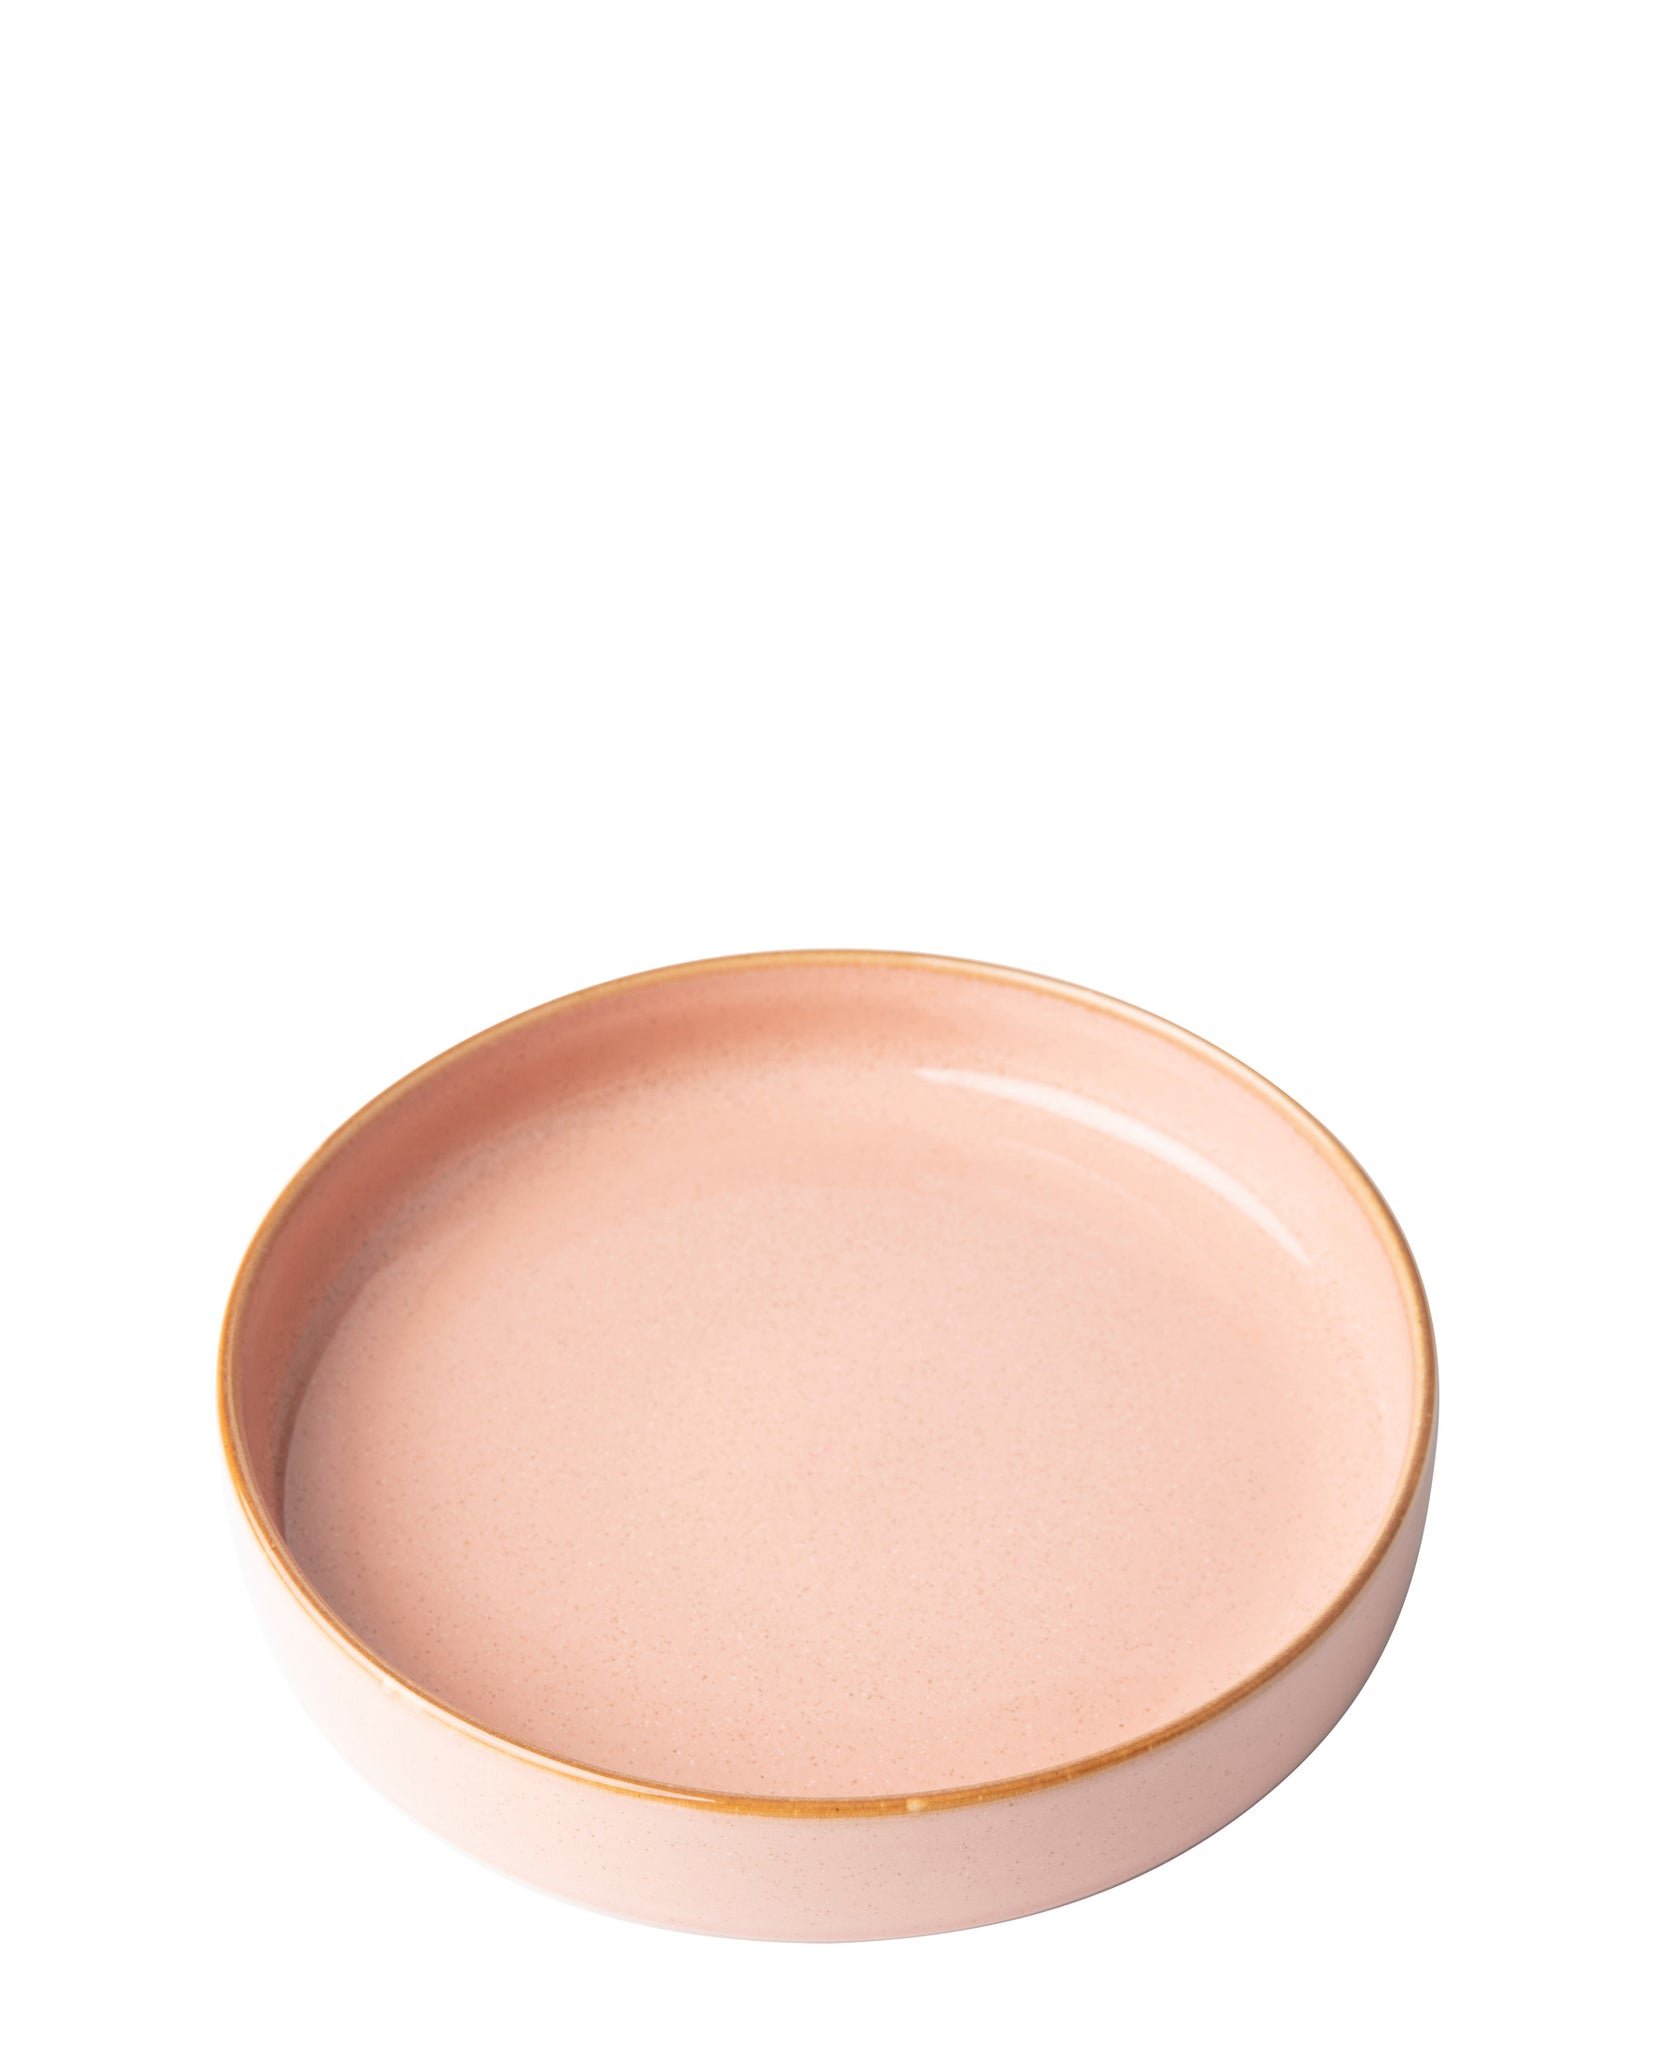 Omada Flat Stackable Pasta Bowl - Pink